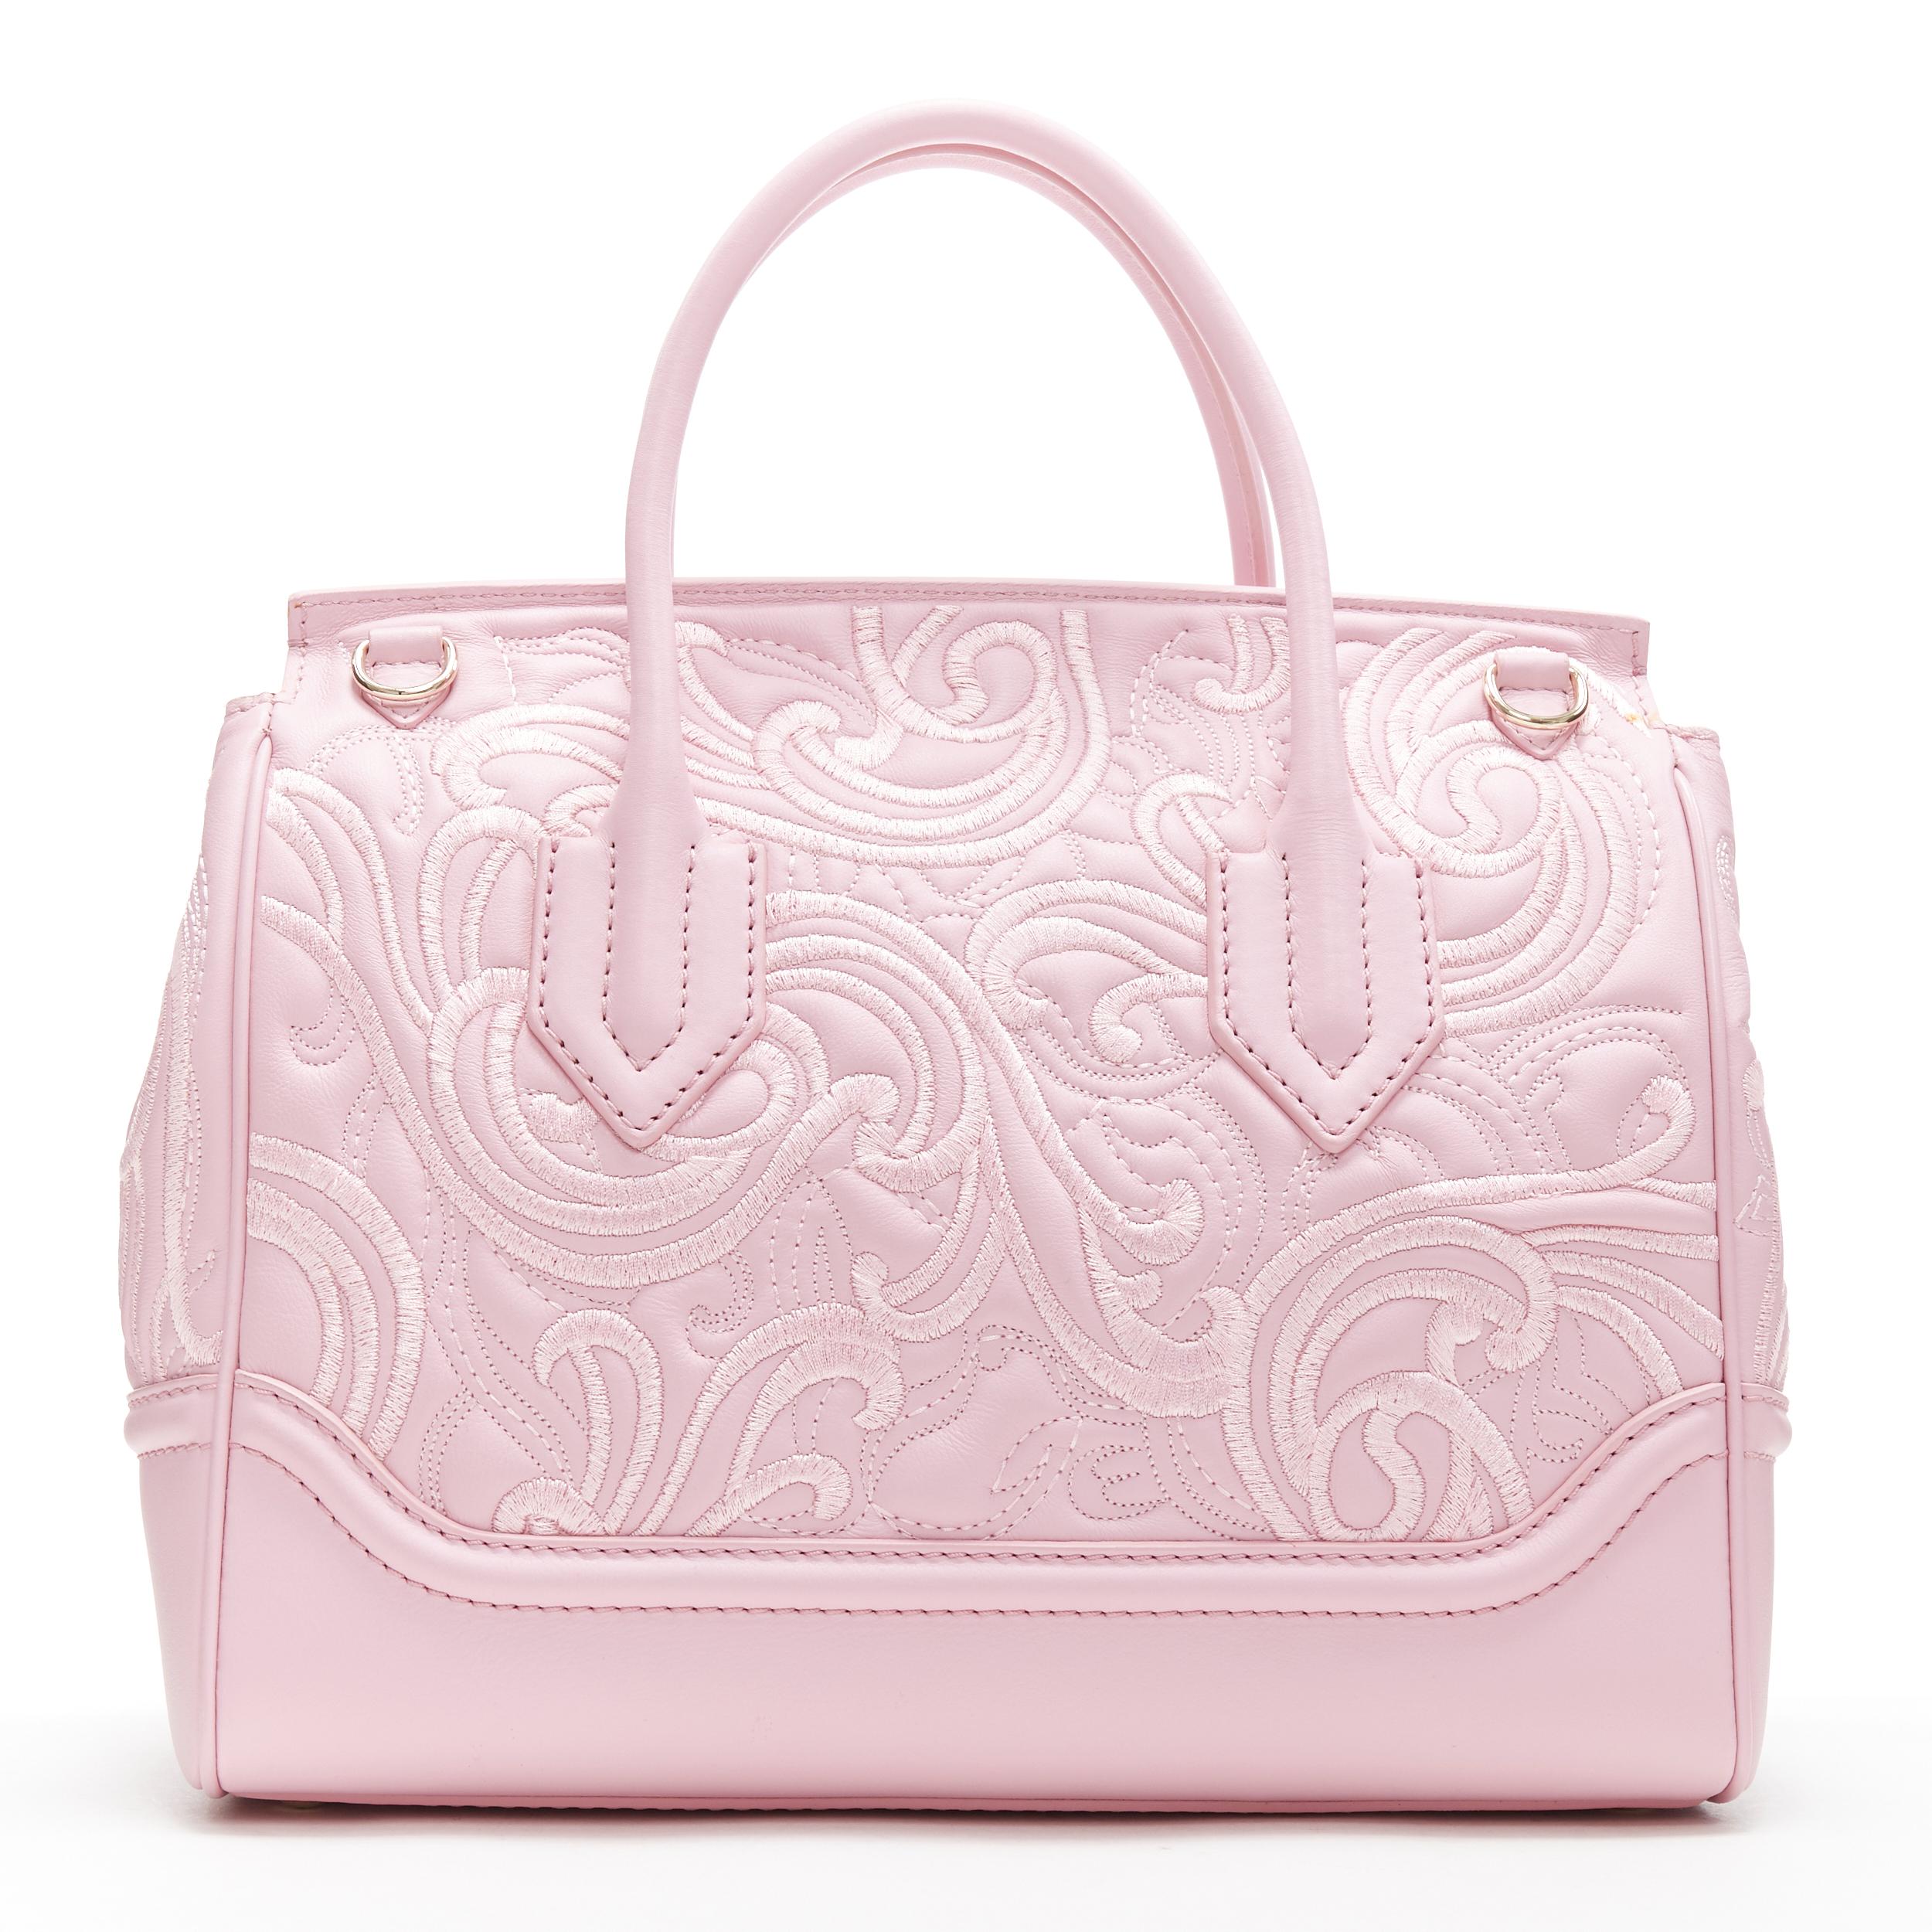 versace palazzo bag pink